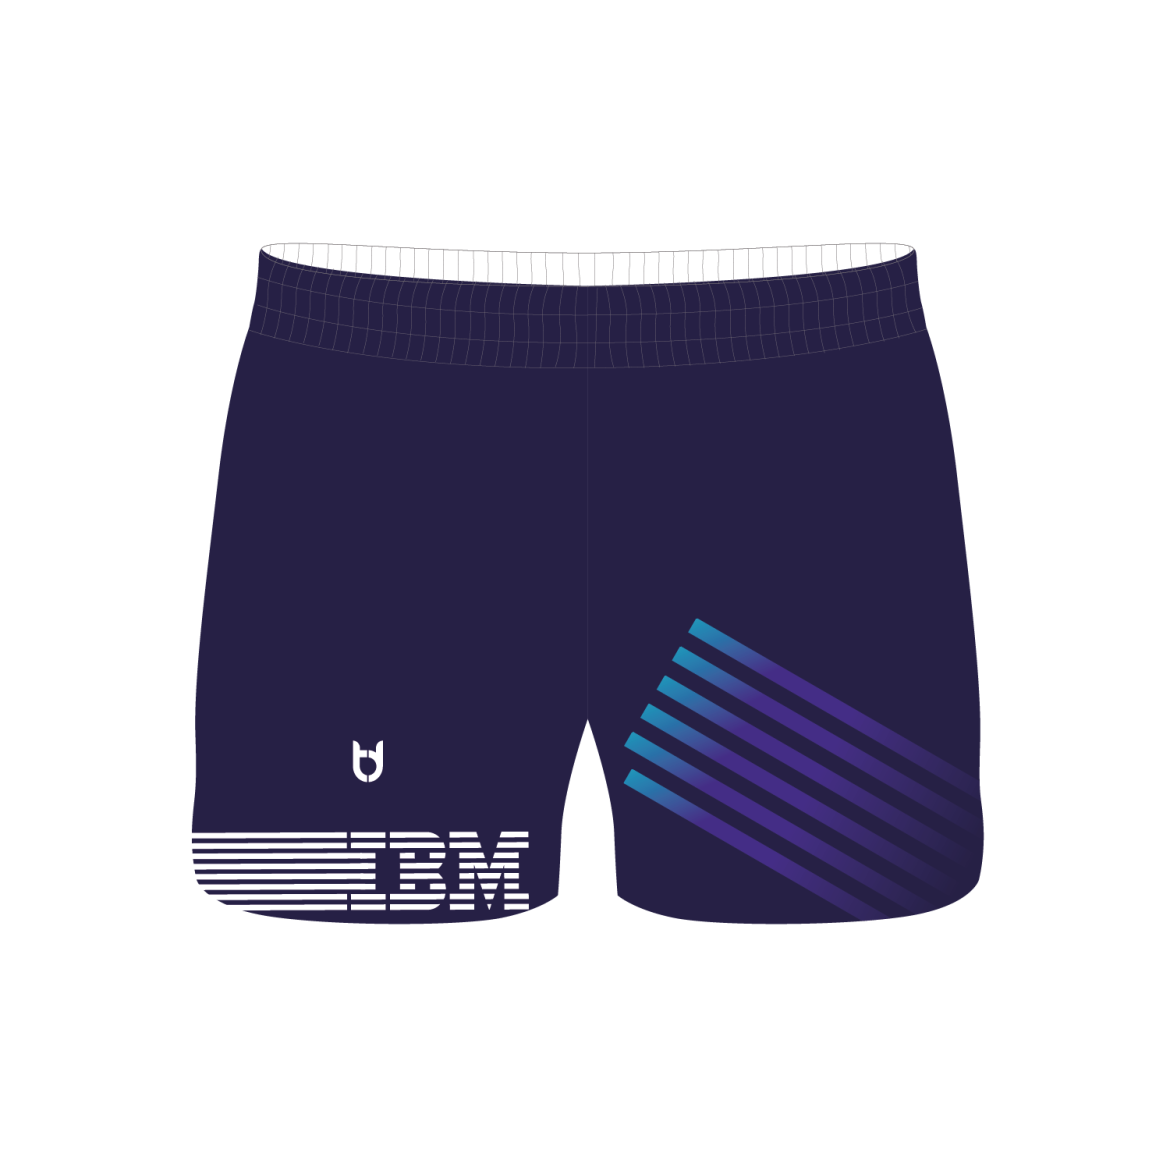 IBM shorts loose running TD sportswear